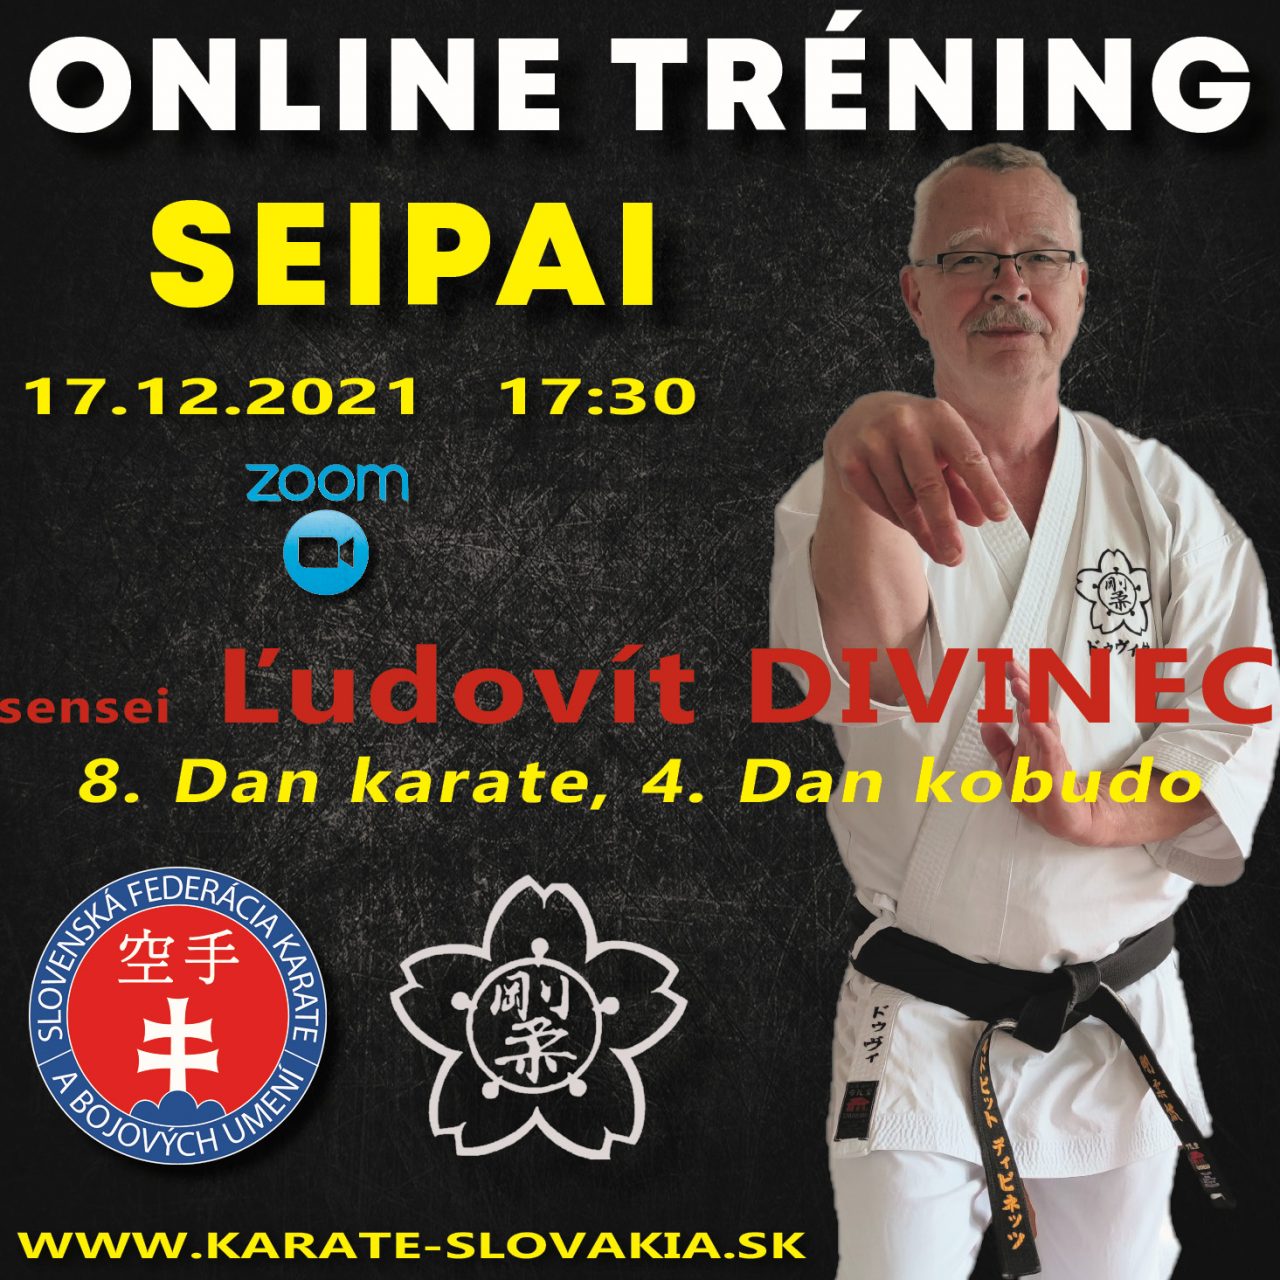 https://karate-slovakia.sk/wp-content/uploads/Duvi_Seipai-1280x1280.jpg